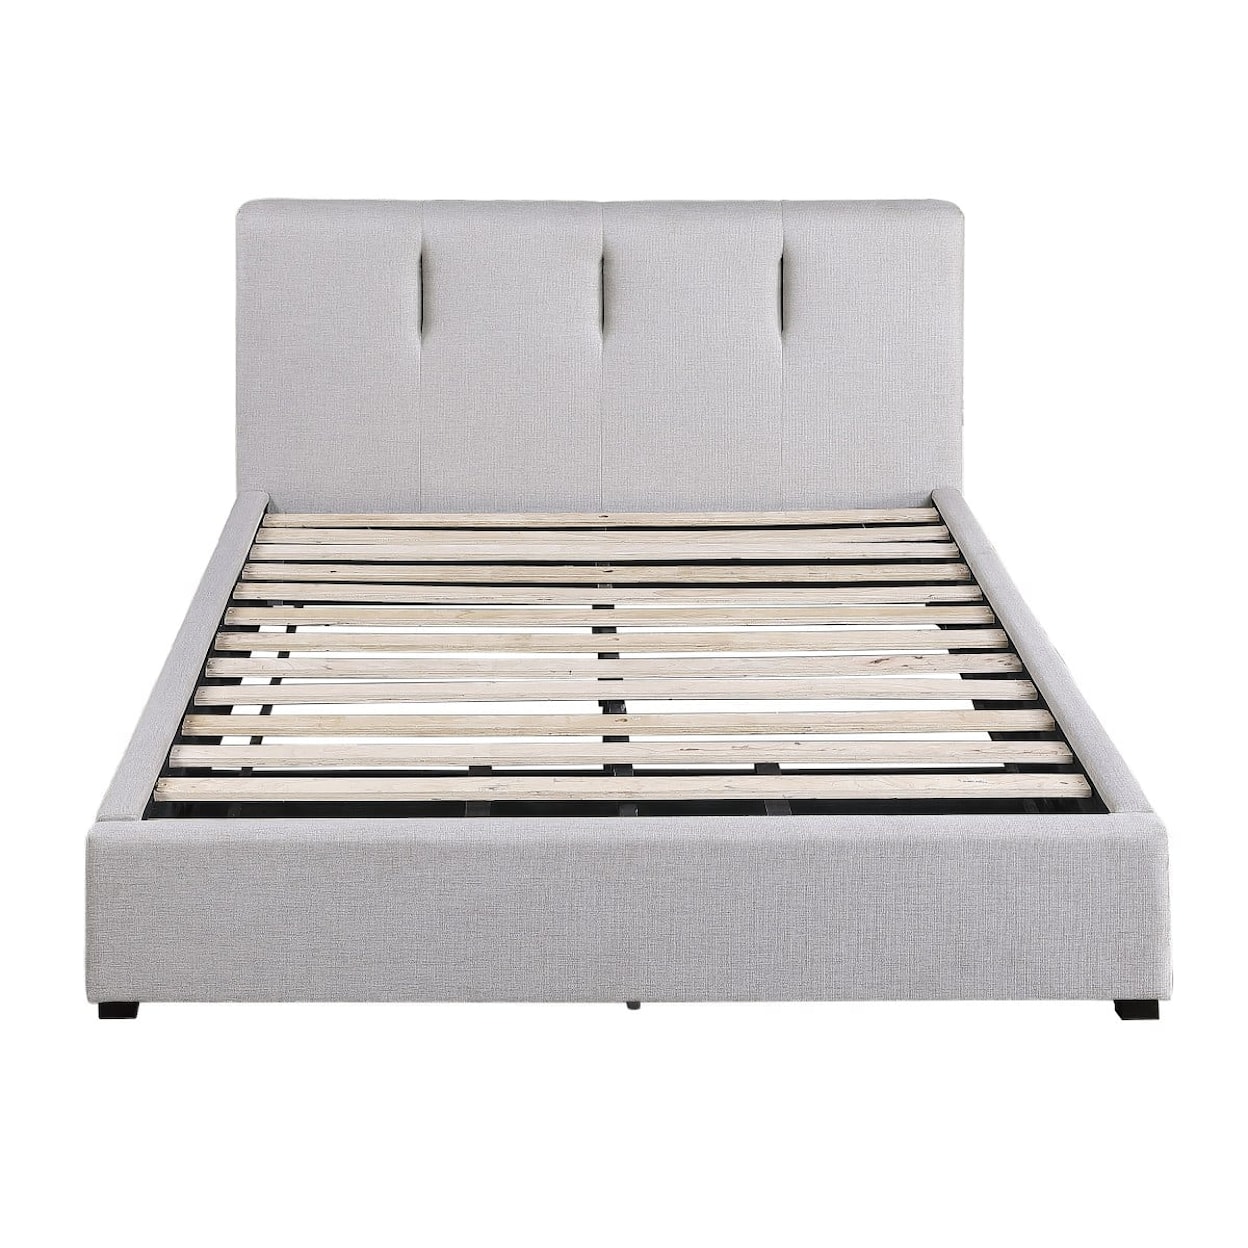 Homelegance Aitana Full Bed with Footboard Storage